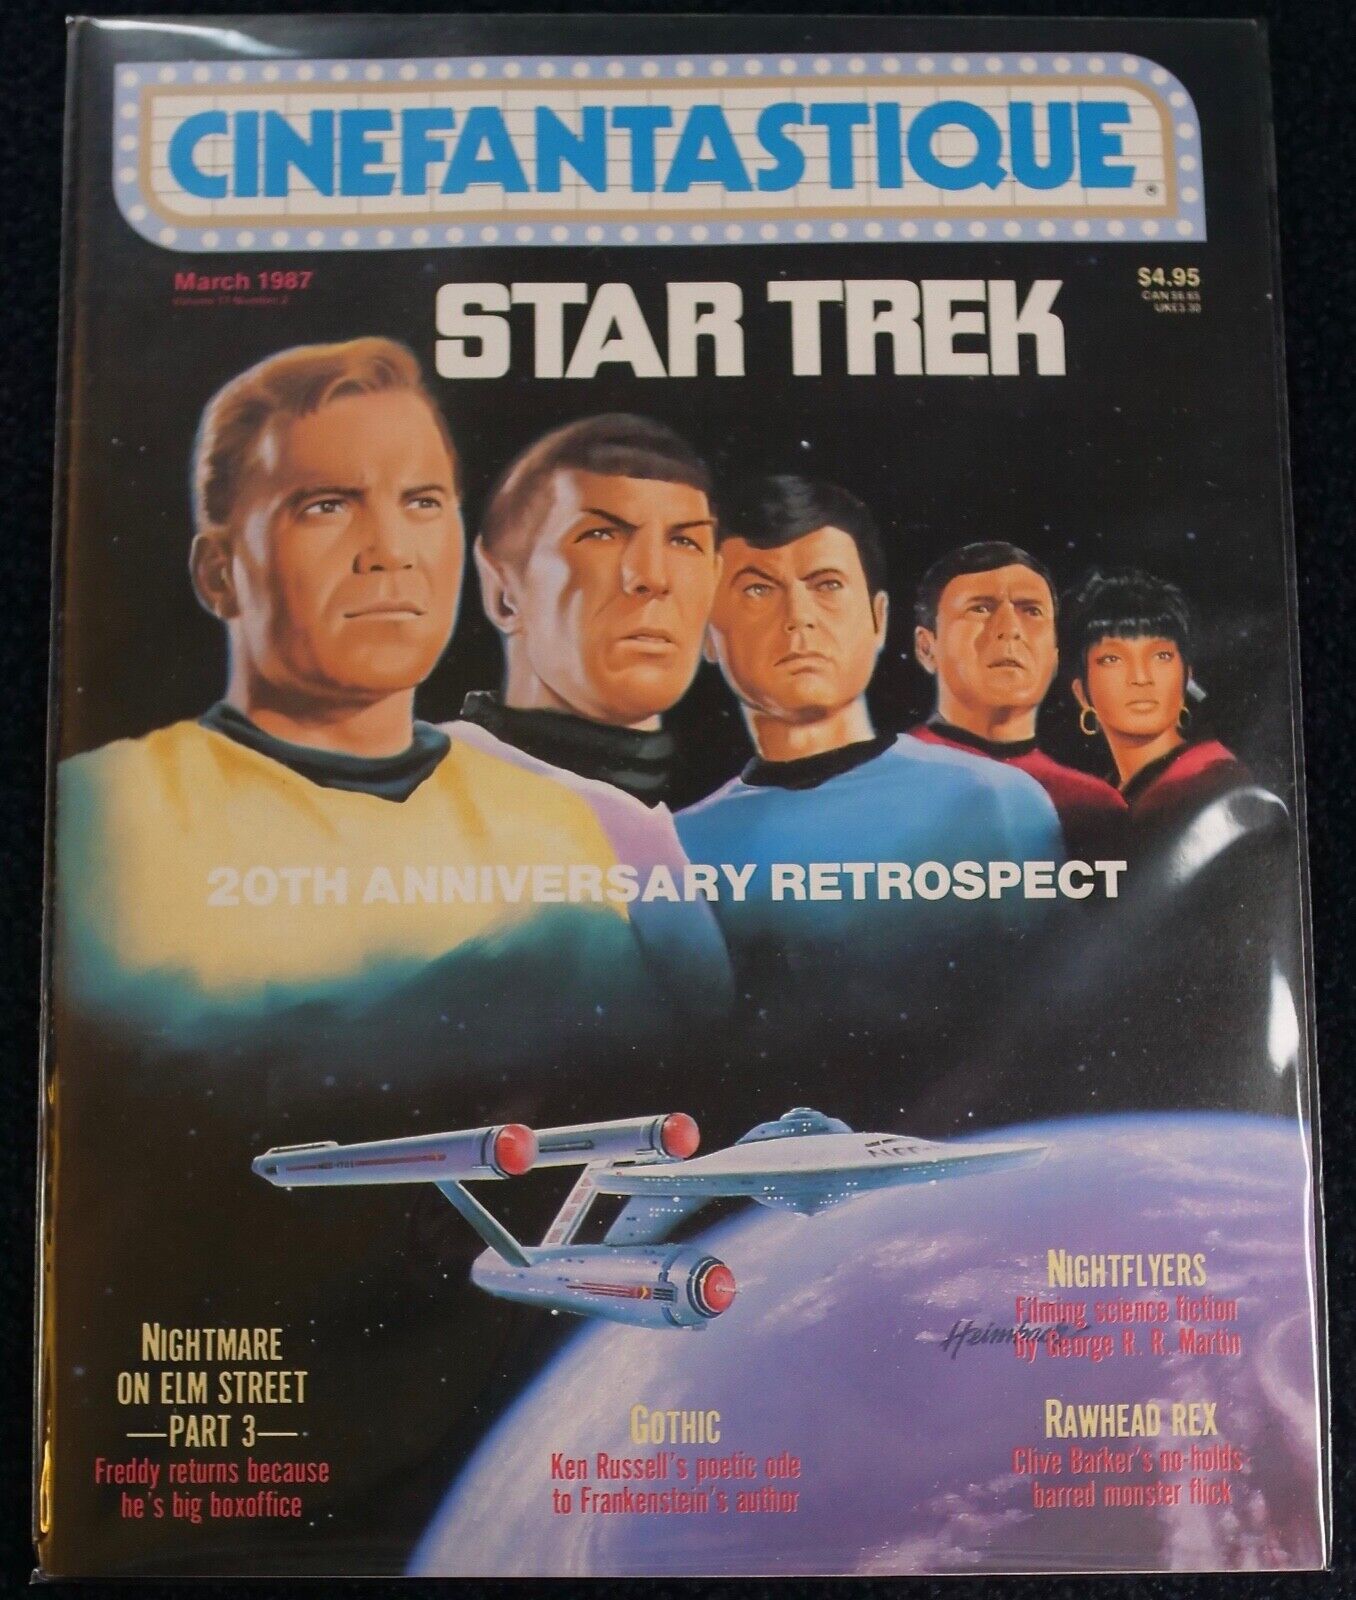 CINEFANTASTIQUE Vol 17 #2 March 1987 - Star Trek 20th Anniversary - NEW